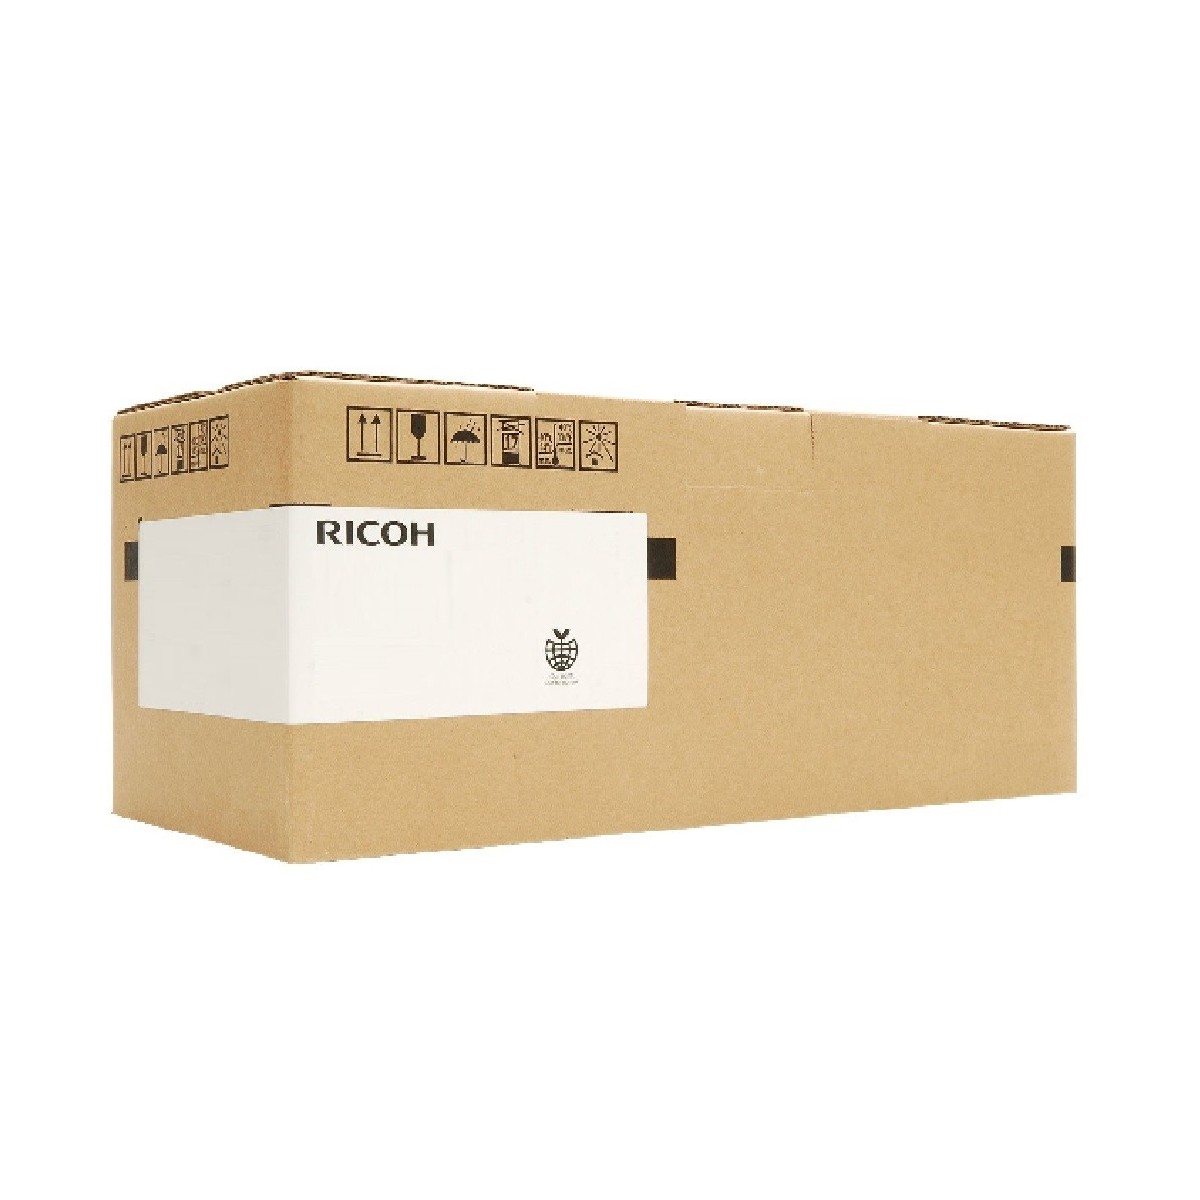 Ricoh B2423830 - Transfer kit - Ricoh - Aficio 3228C Aficio 3228C SPF Aficio 3235C Aficio 3235C SPF Aficio 3245C - 1 pc(s)